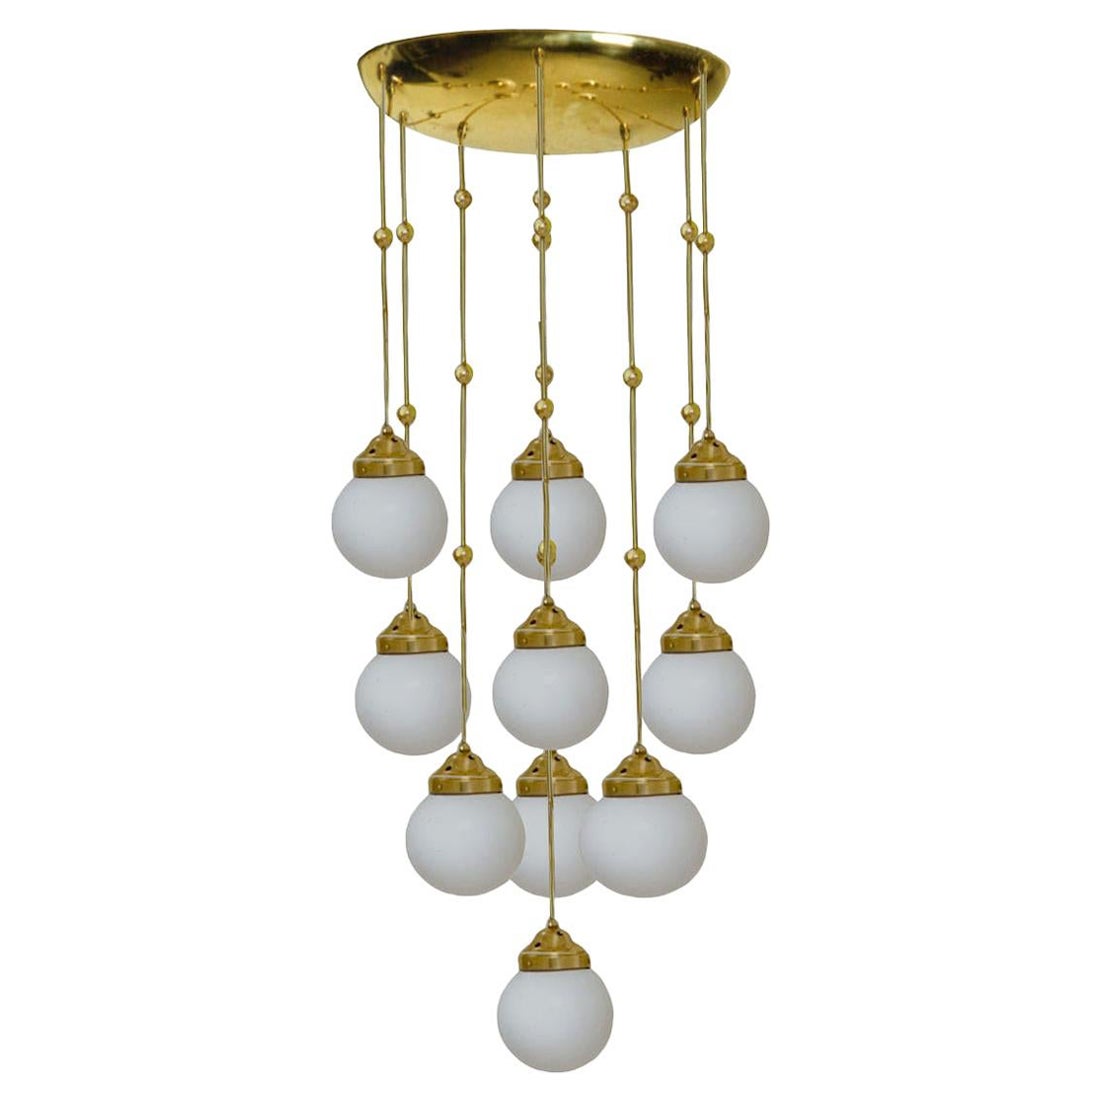 Jugendstil Josef Hoffmann & Wiener Werkstätte Ceiling Light with Bulbs, Re Editi For Sale